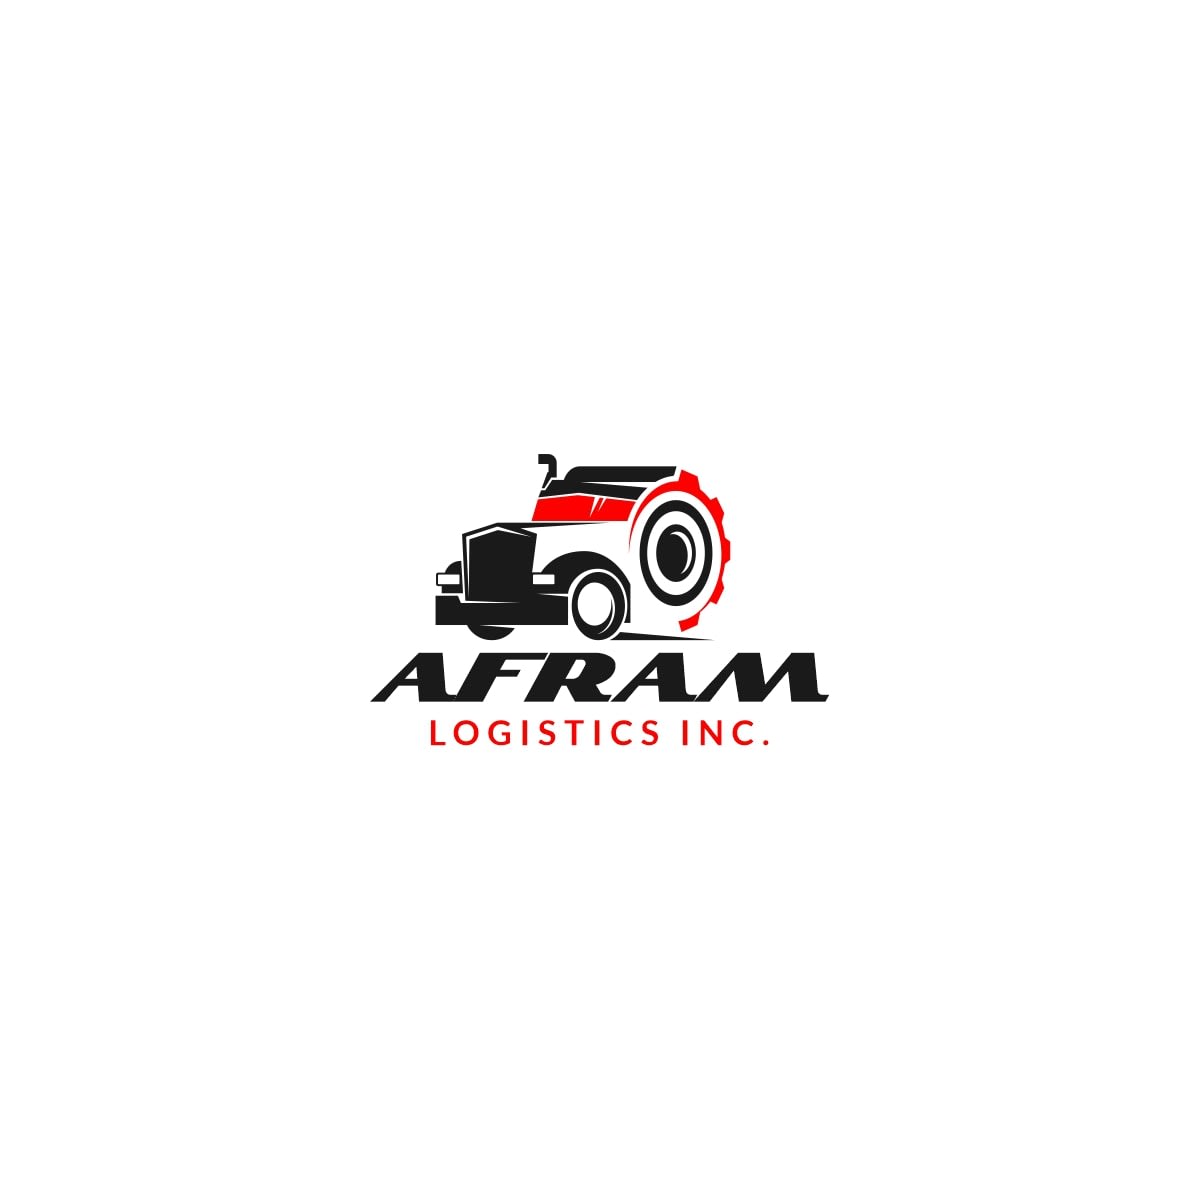 Afram Logistics Inc.